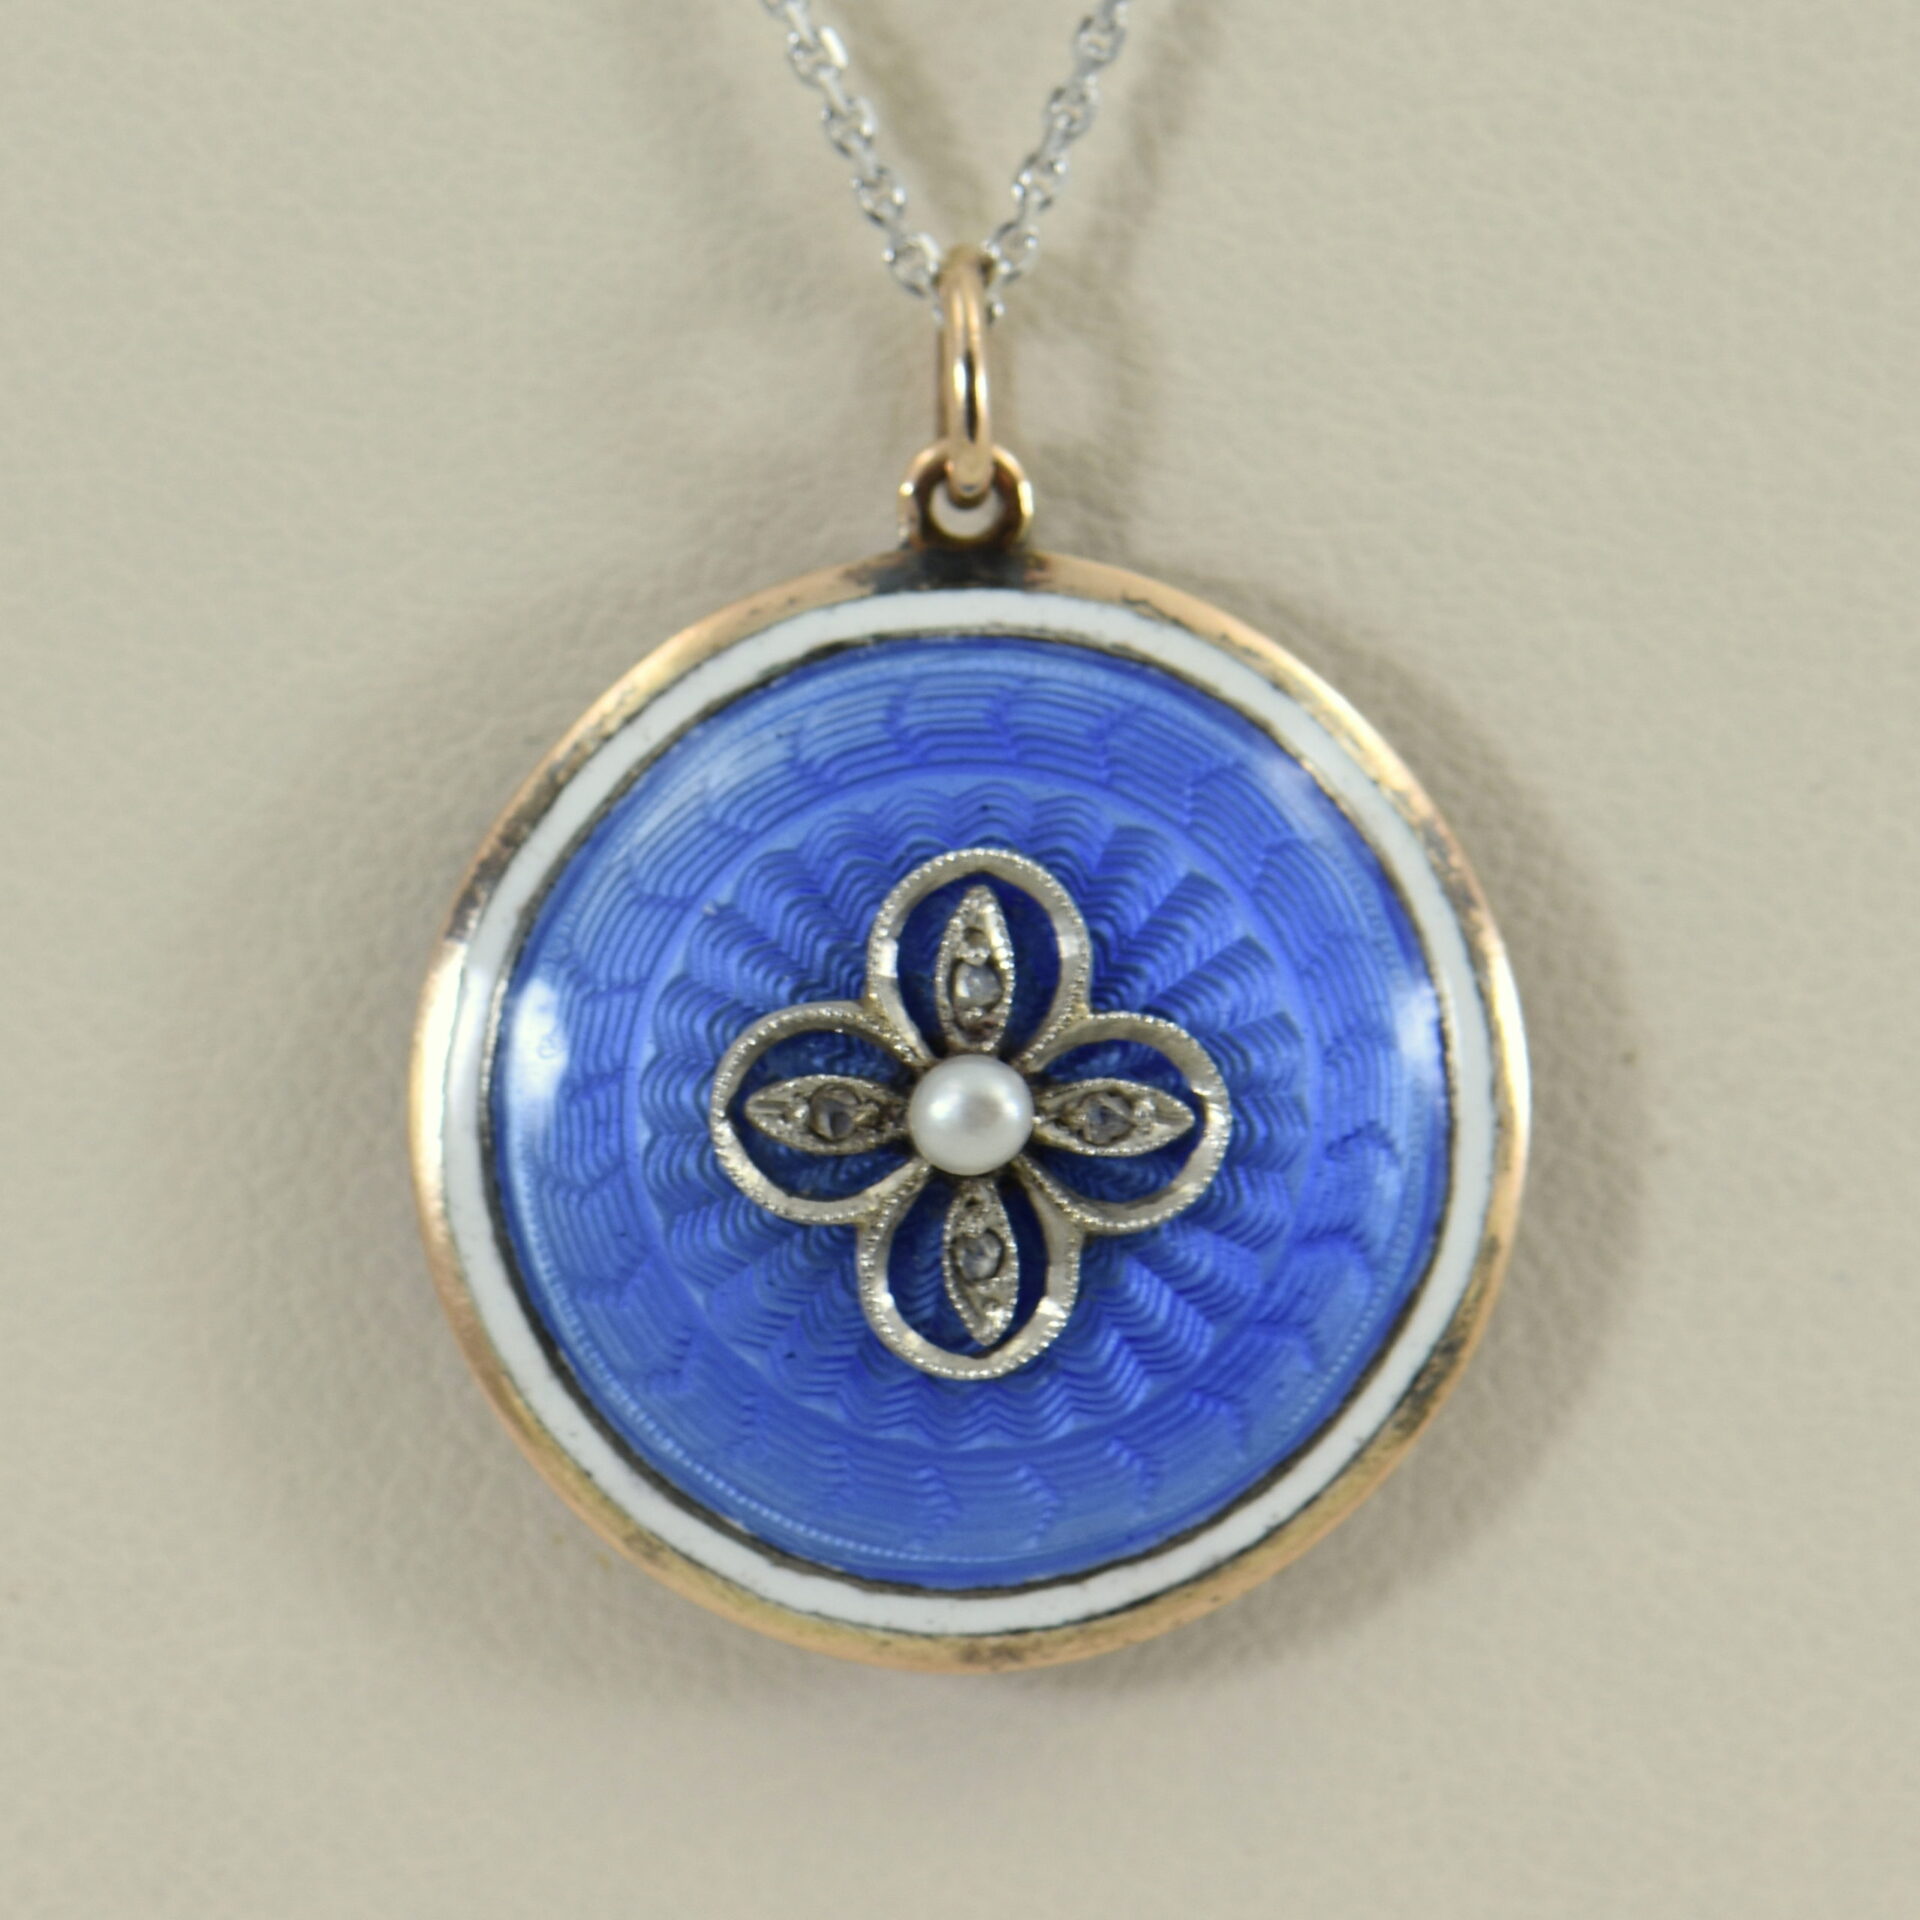 Antique Edwardian Blue Enamel & Diamond Pendant circa 1905 | Exquisite ...